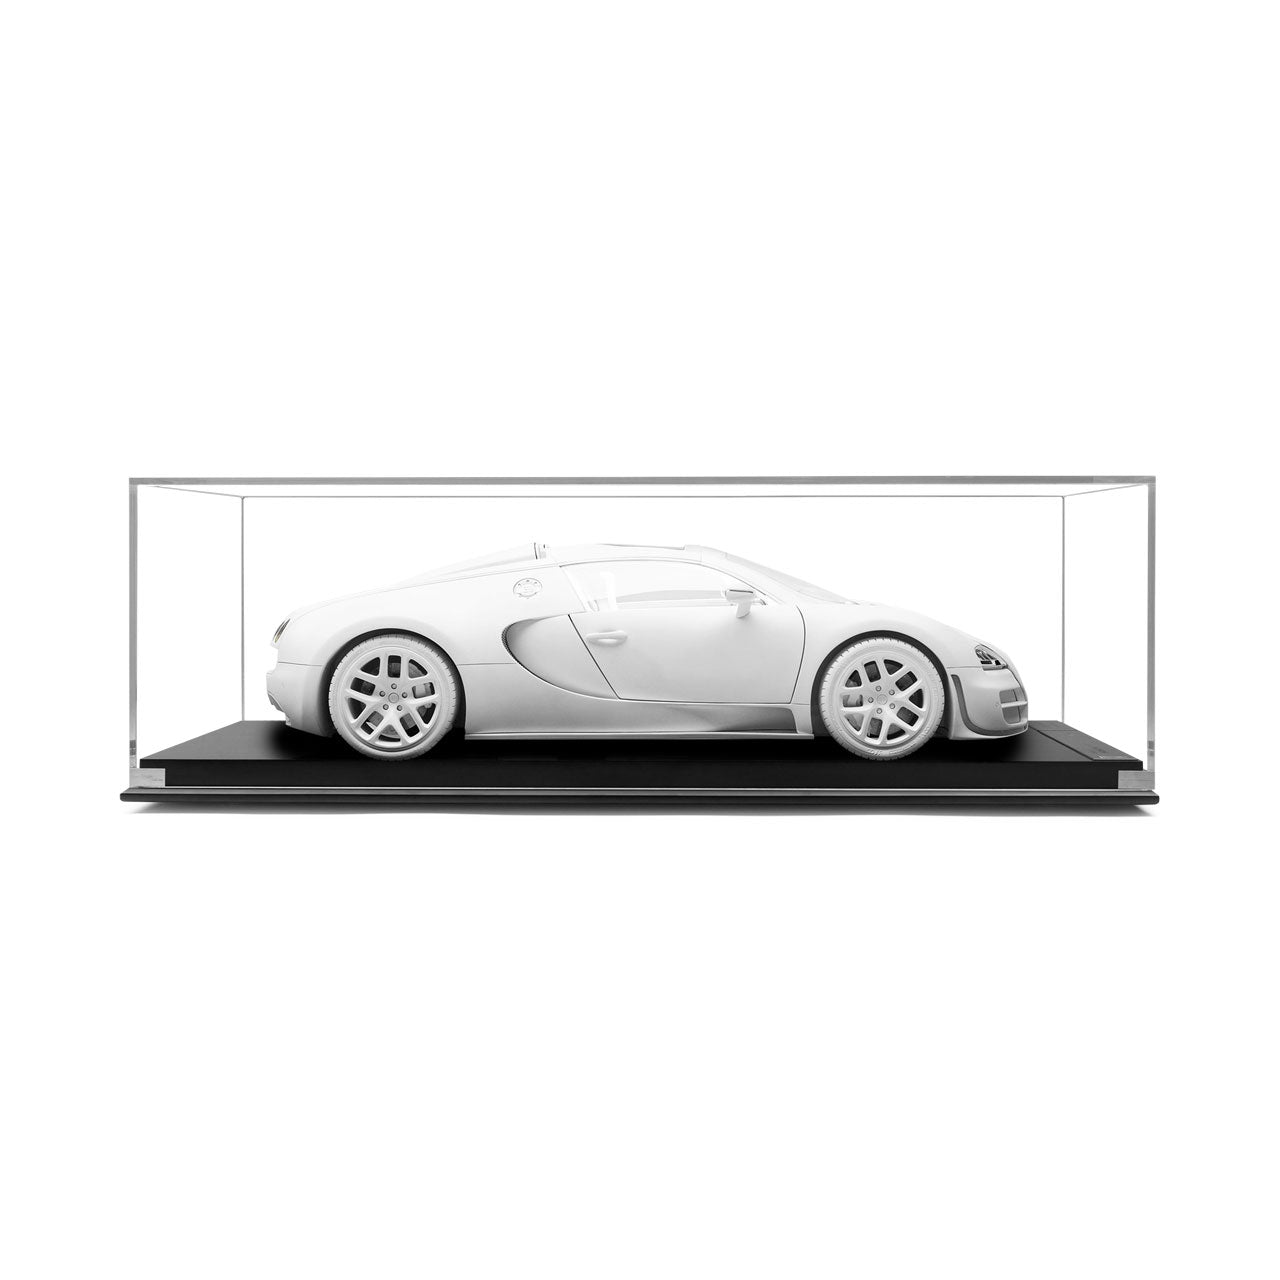 Modell des Bugatti Veyron Grand Sport Vitesse im Maßstab 1:8